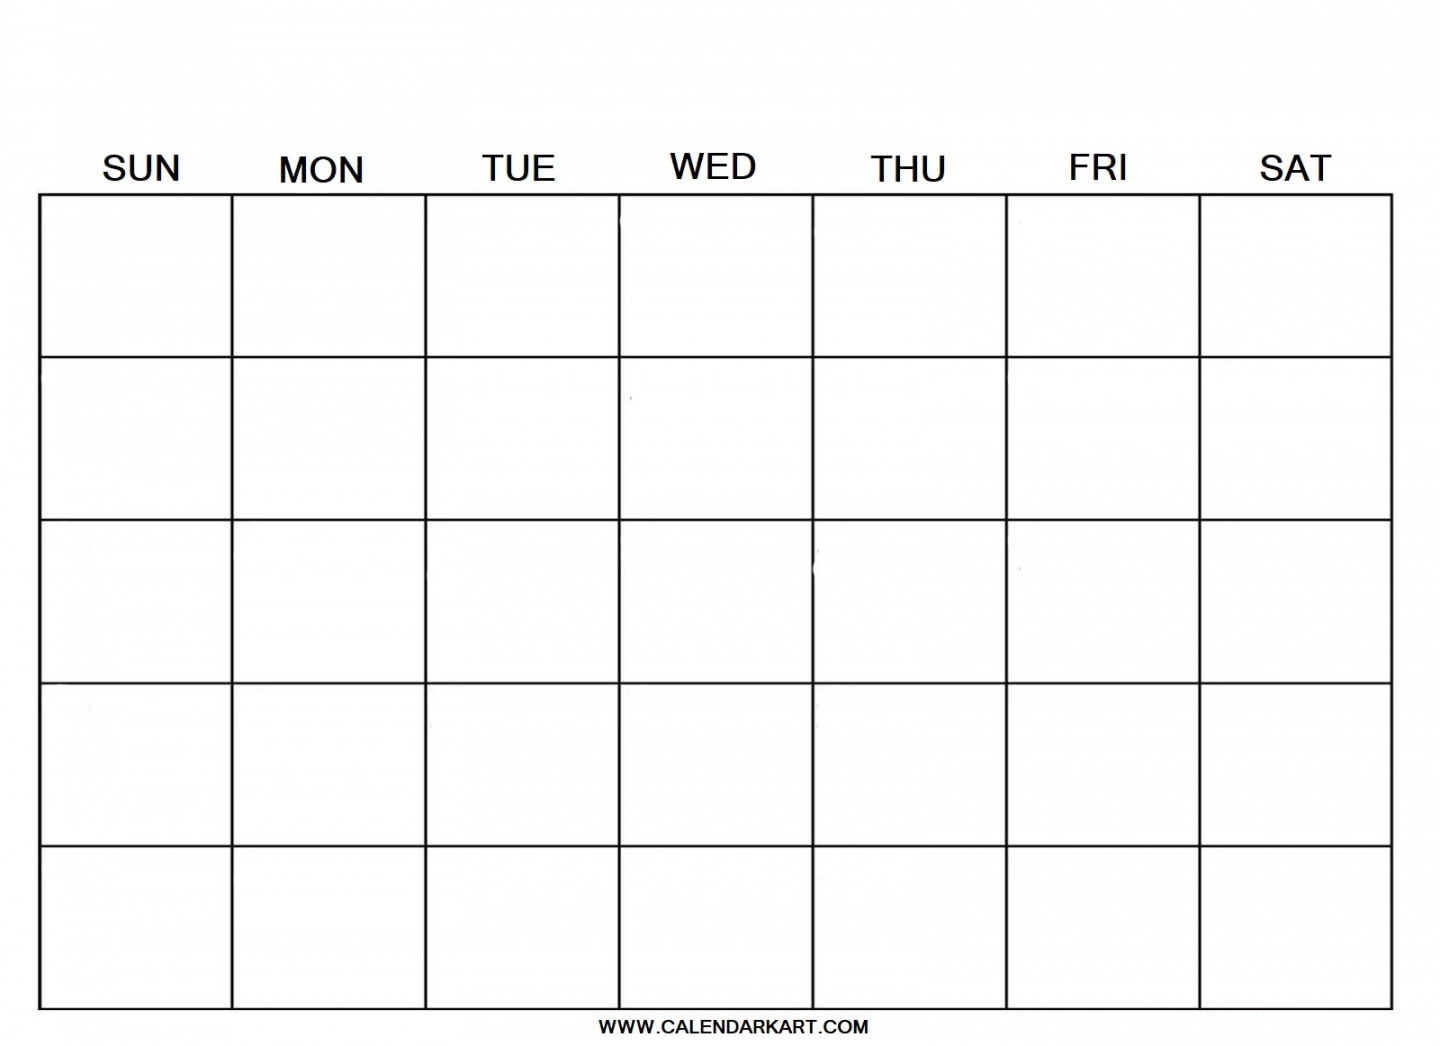 Free Blank Calendar Printables - Printable - Free Printable Blank Calendar Templates - CalendarKart